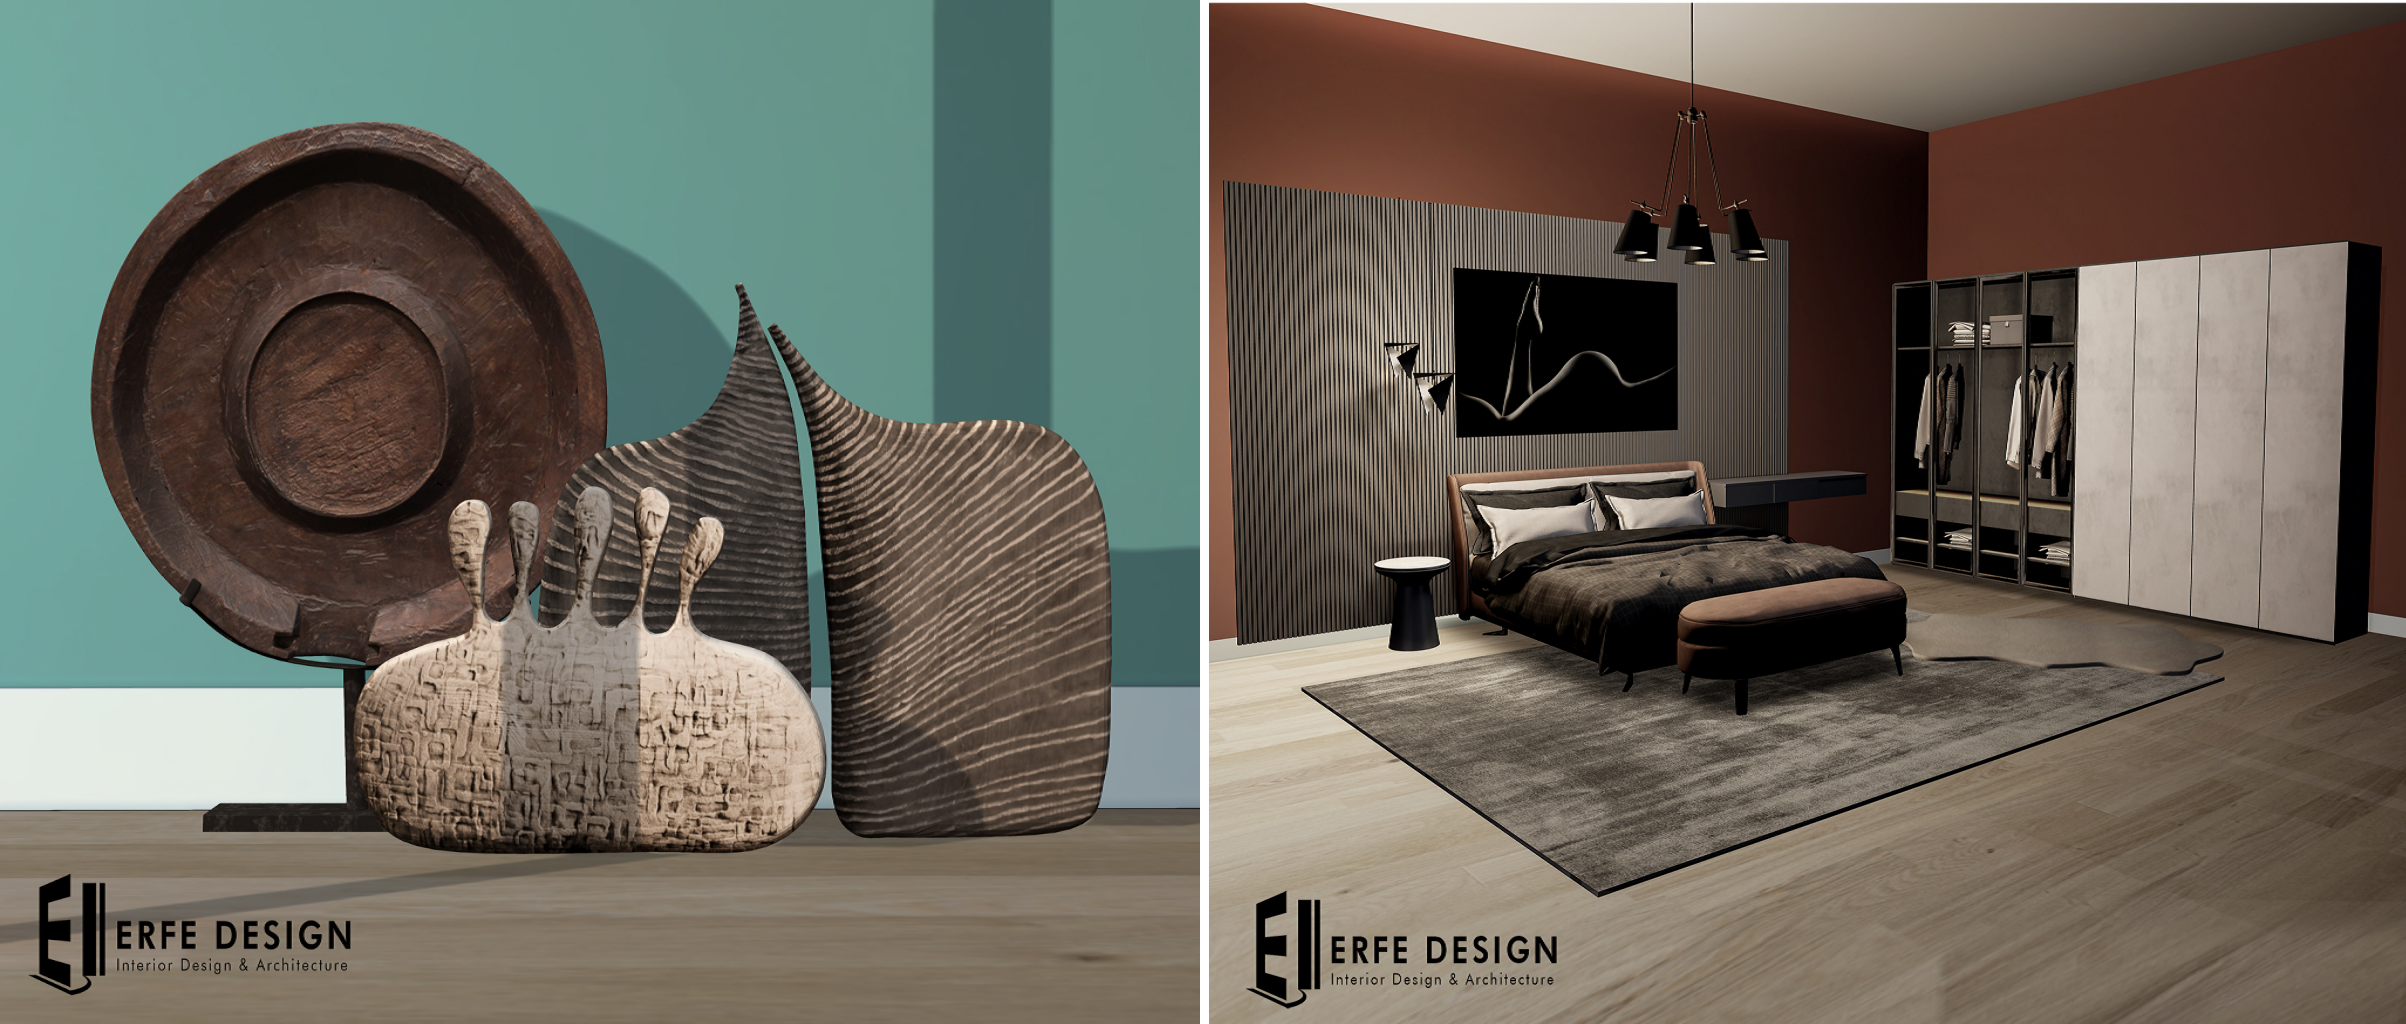 Erfe Design – Achilles Decorative Set & Astra Bedroom Set